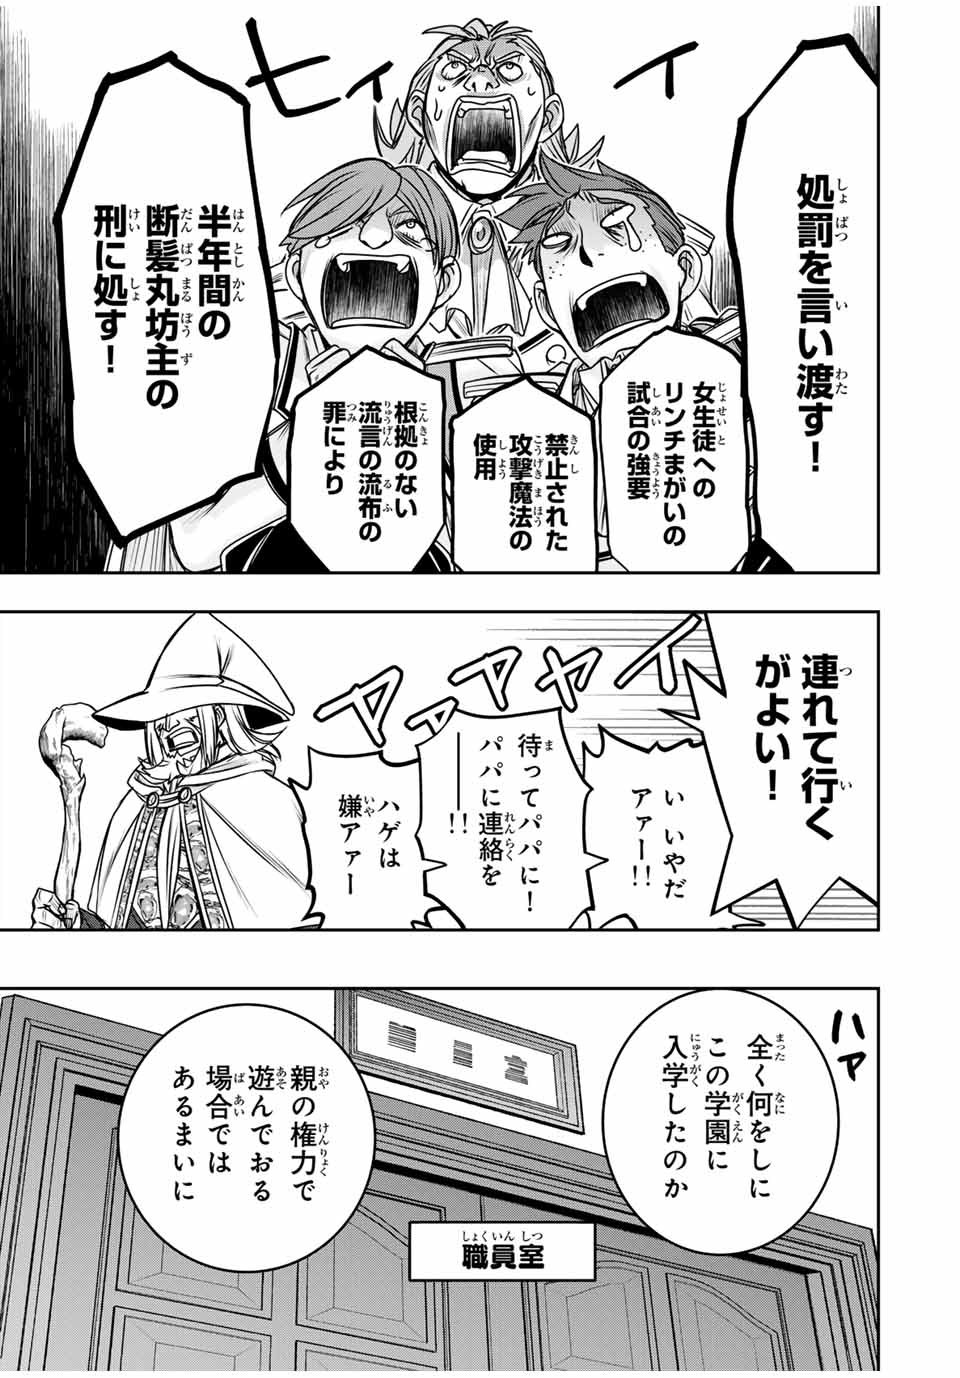 Nengan no Akuyaku Reijou (Last Boss) no Karada wo Teniiretazo!  - Chapter 11 - Page 1